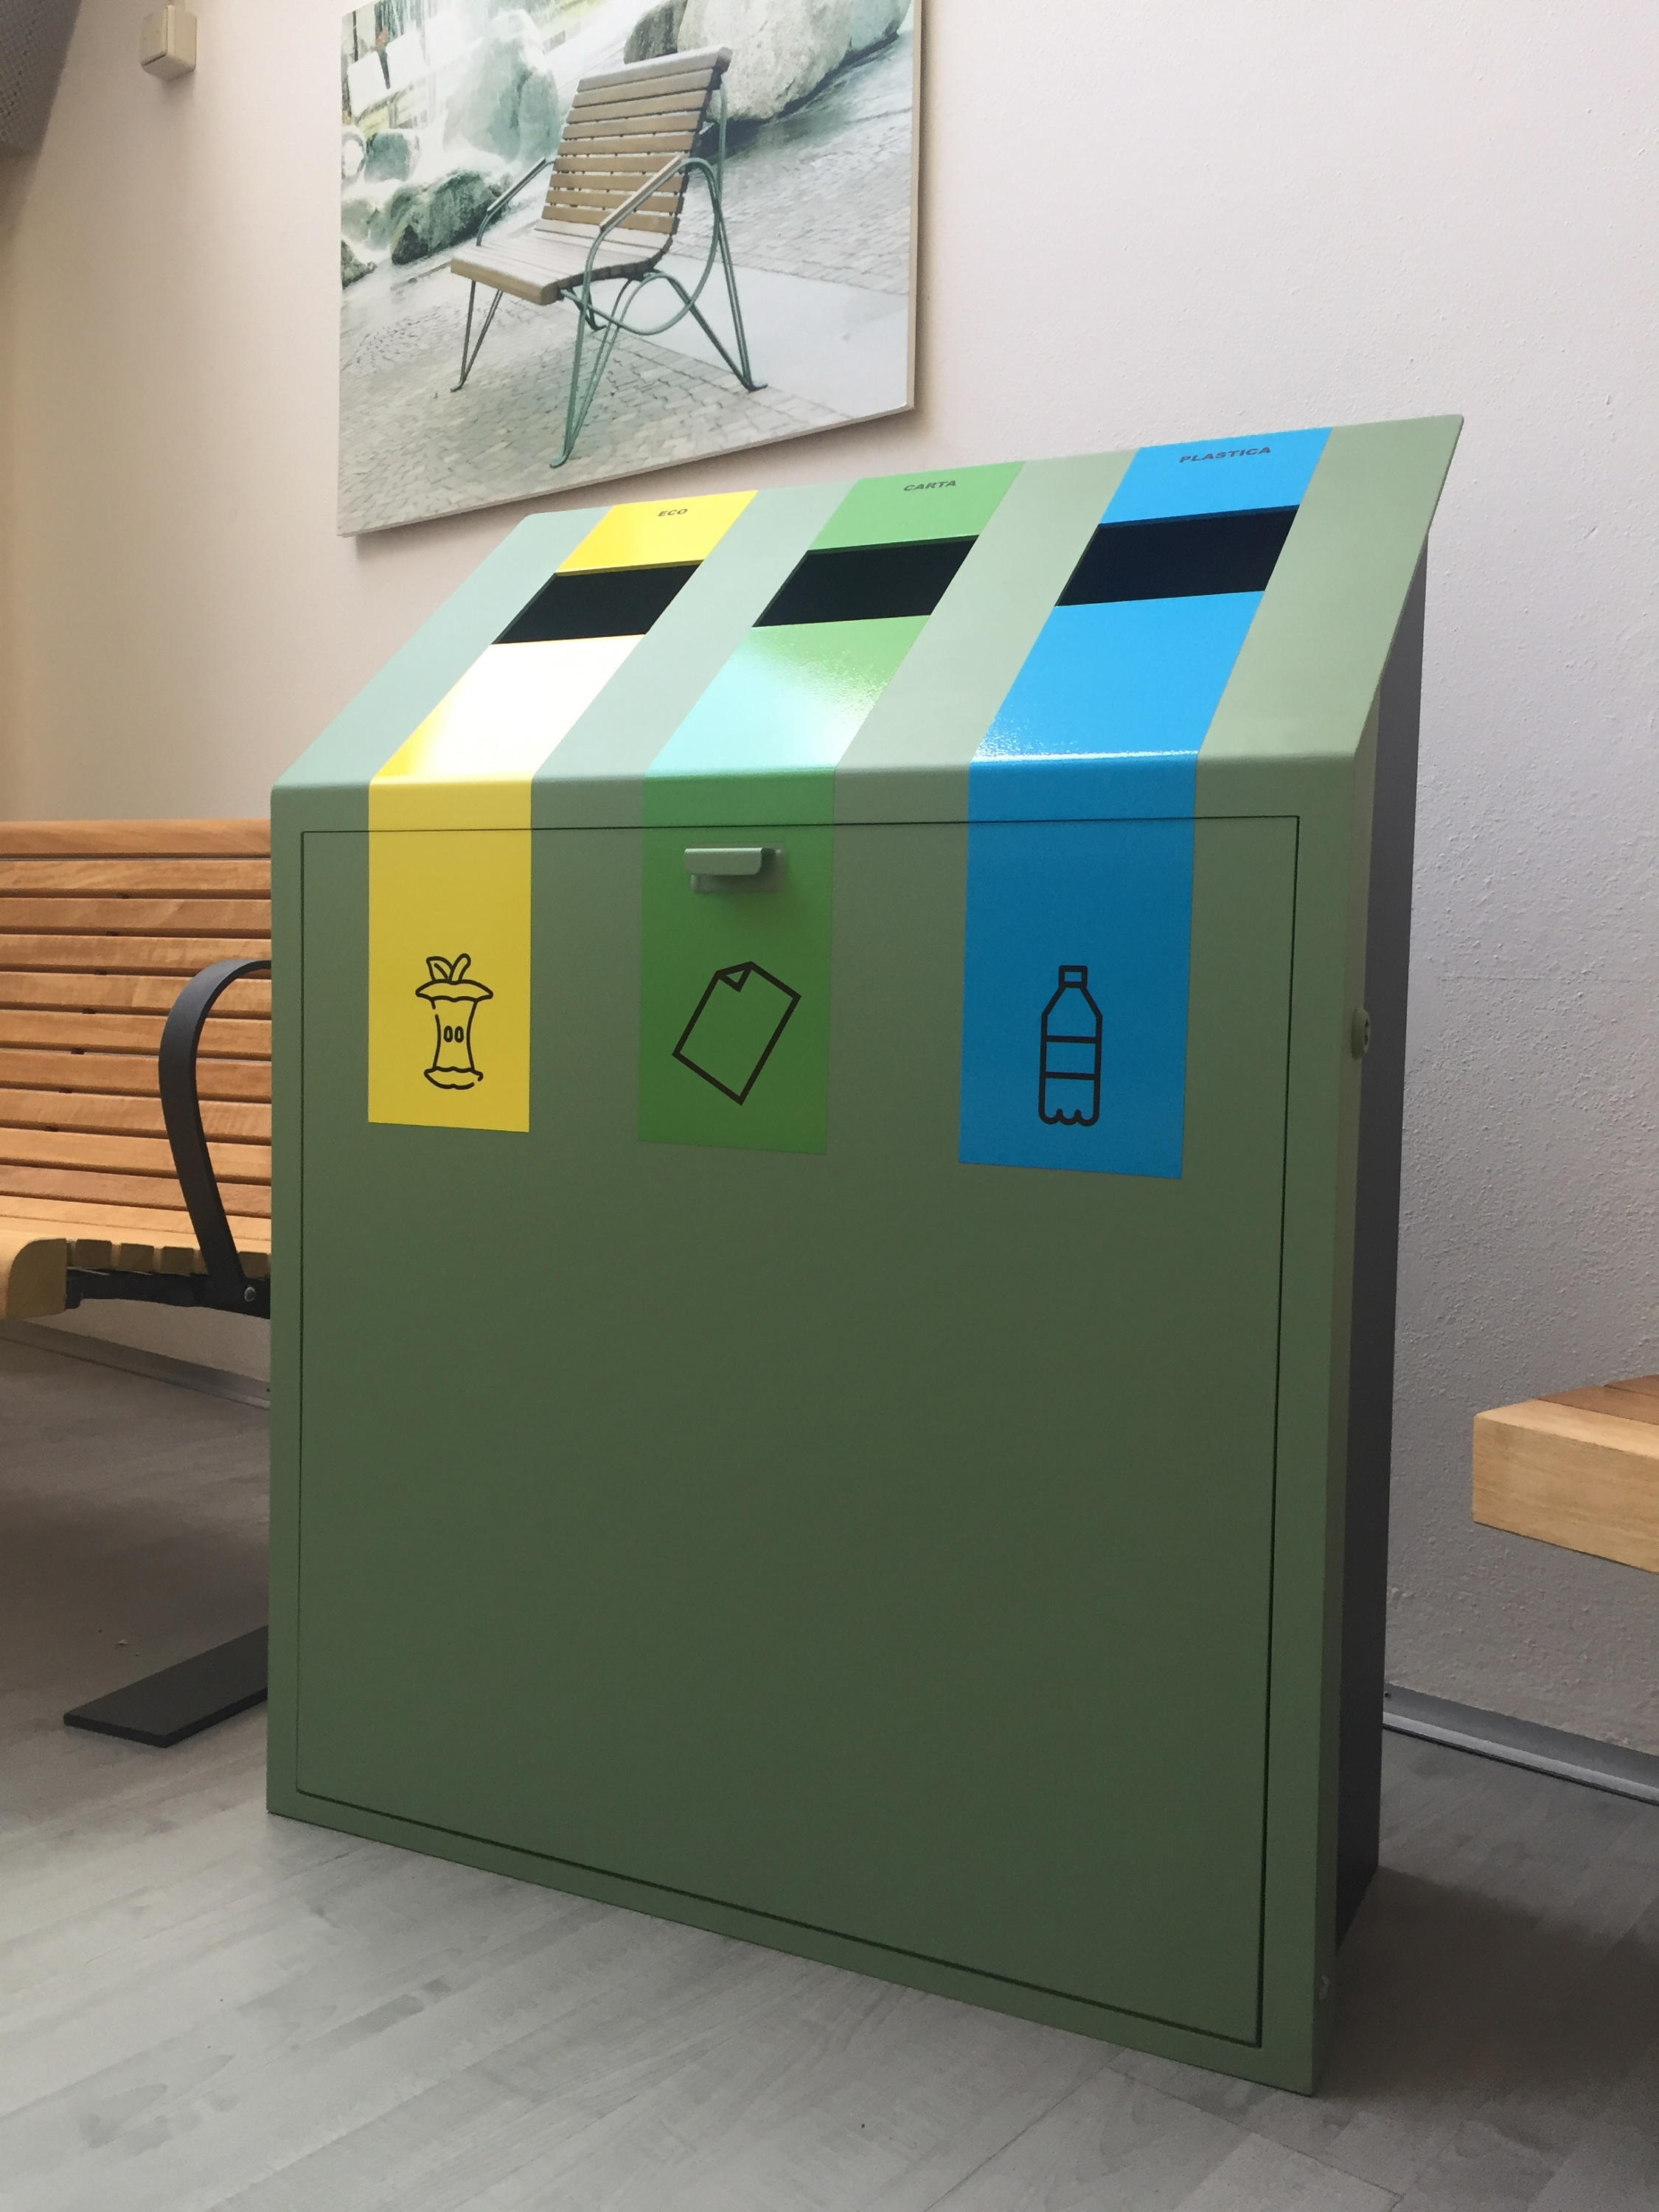 Waste sorting bins - Mobilier urbain, Univers & Cité